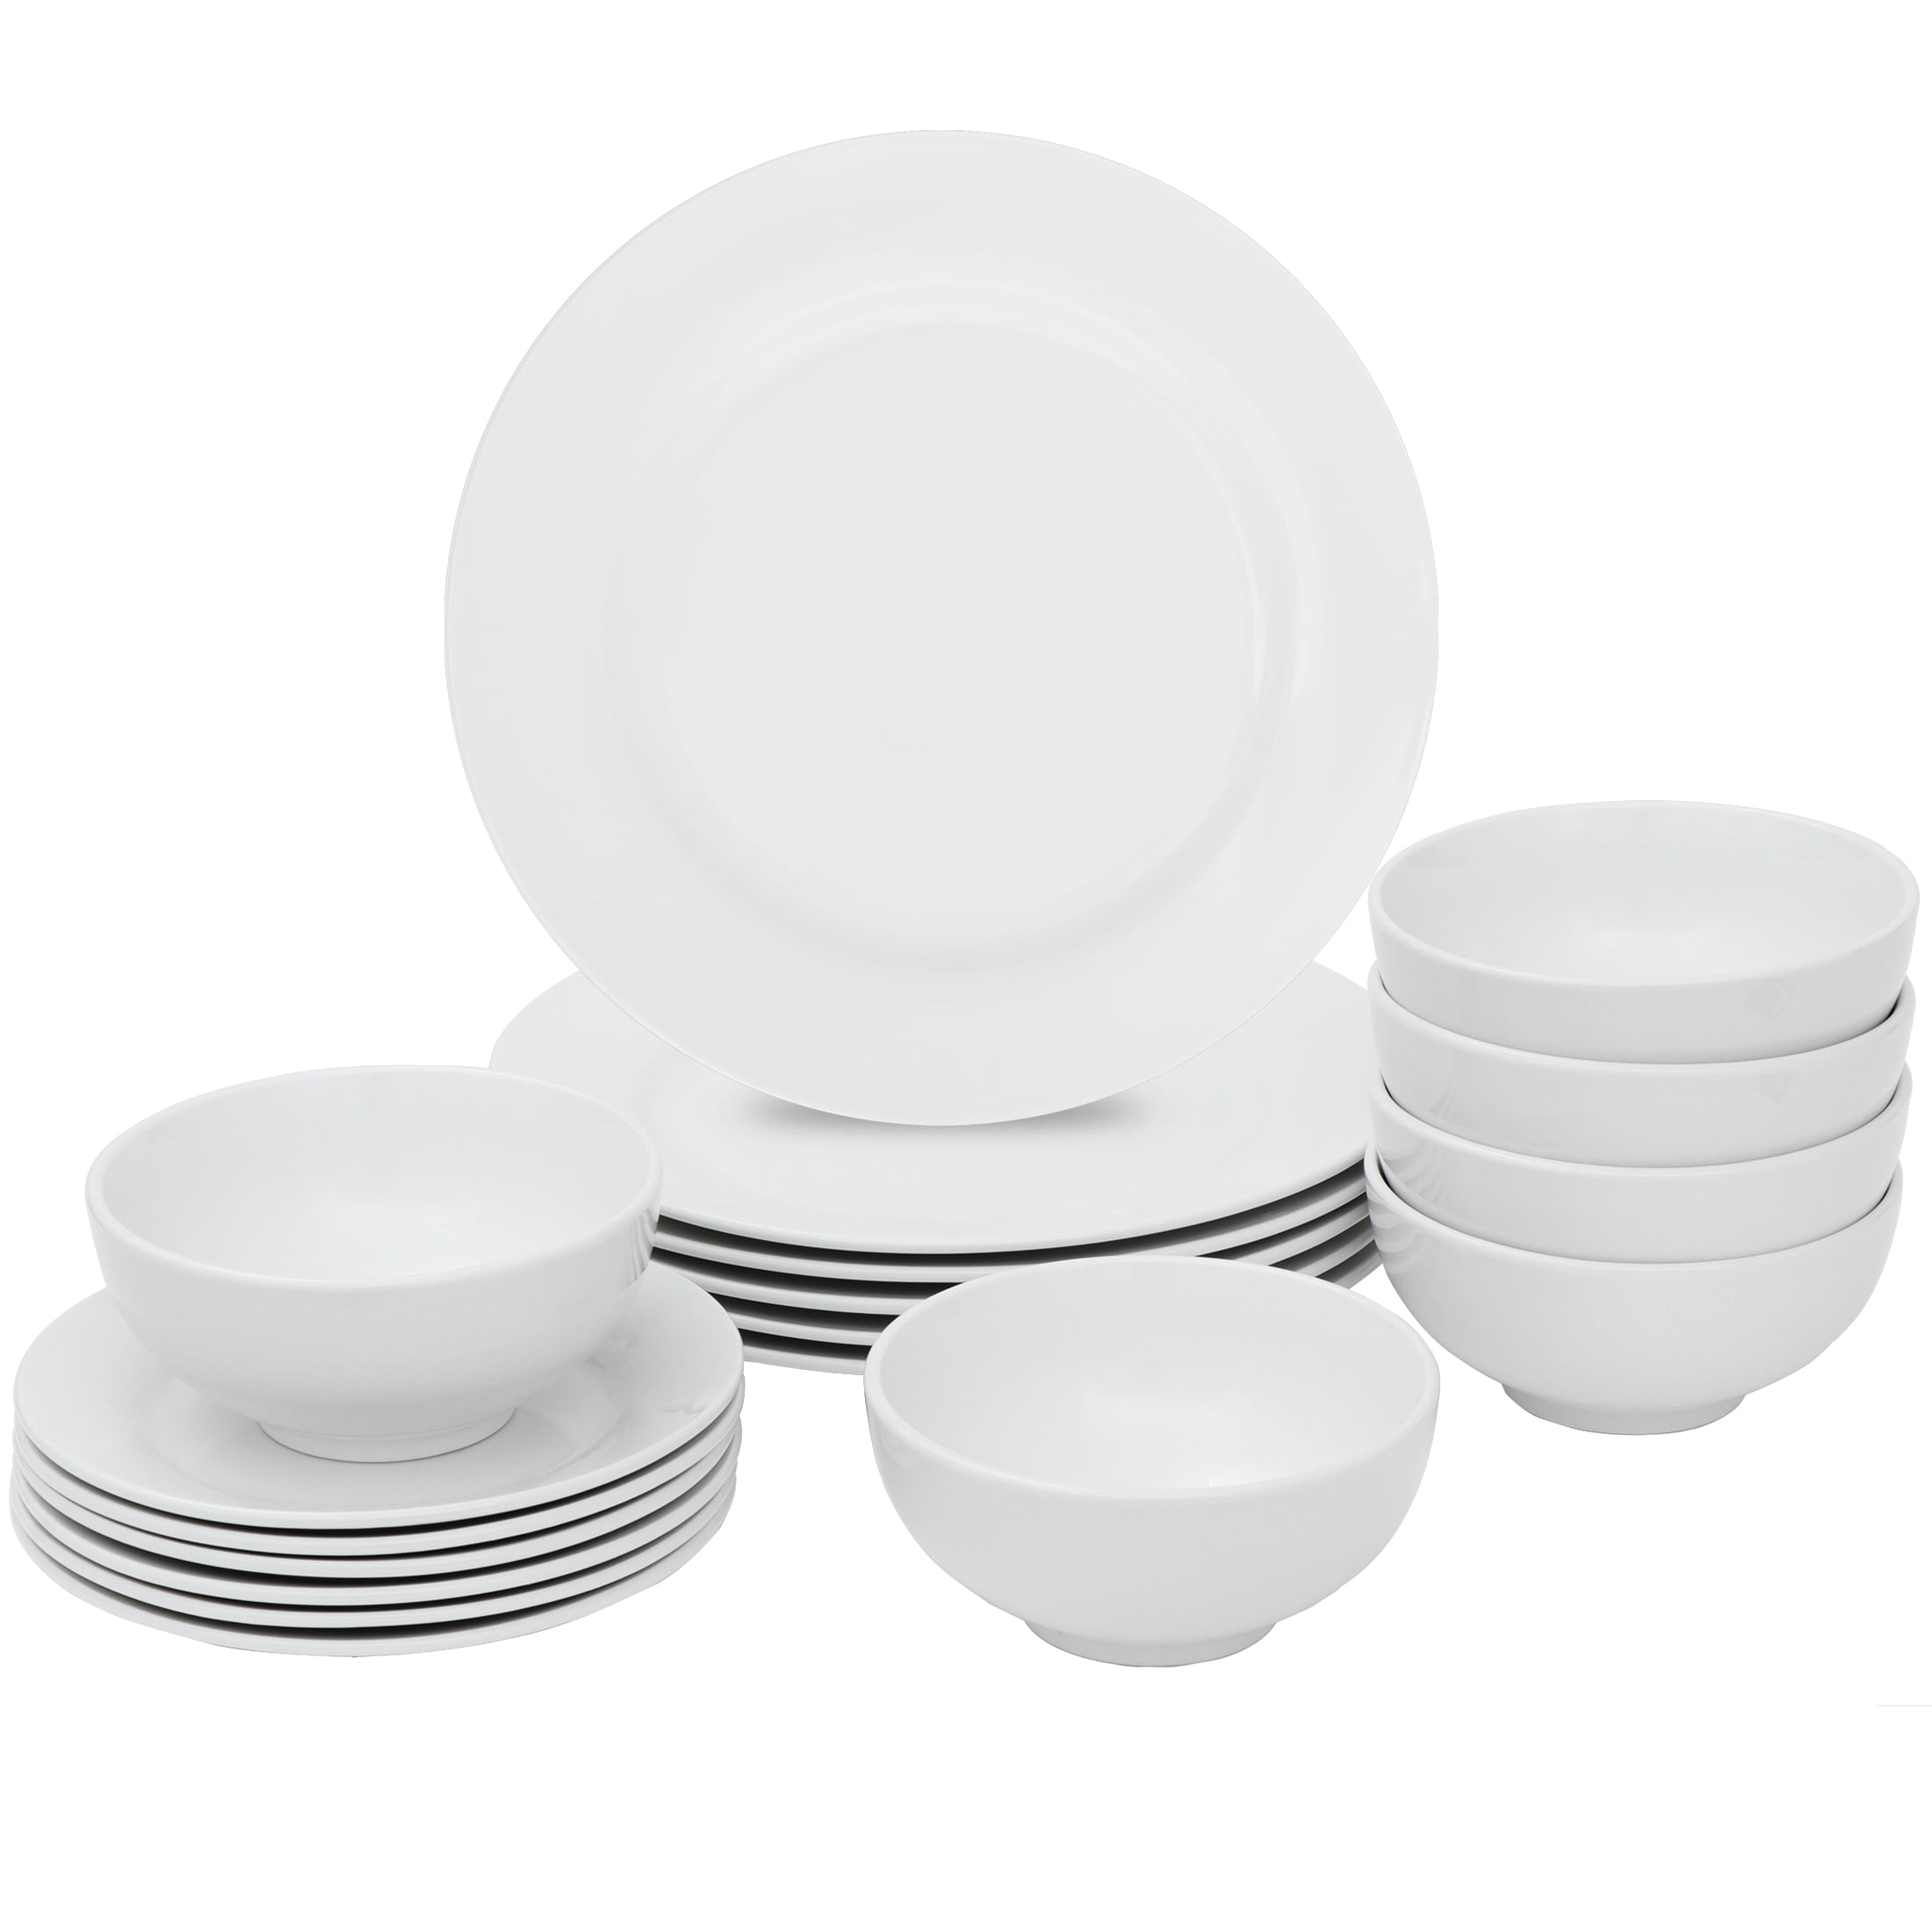 18-Pieces Dinner Set Porcelain Dinnerware Crockery Dining Plates Service for 6 